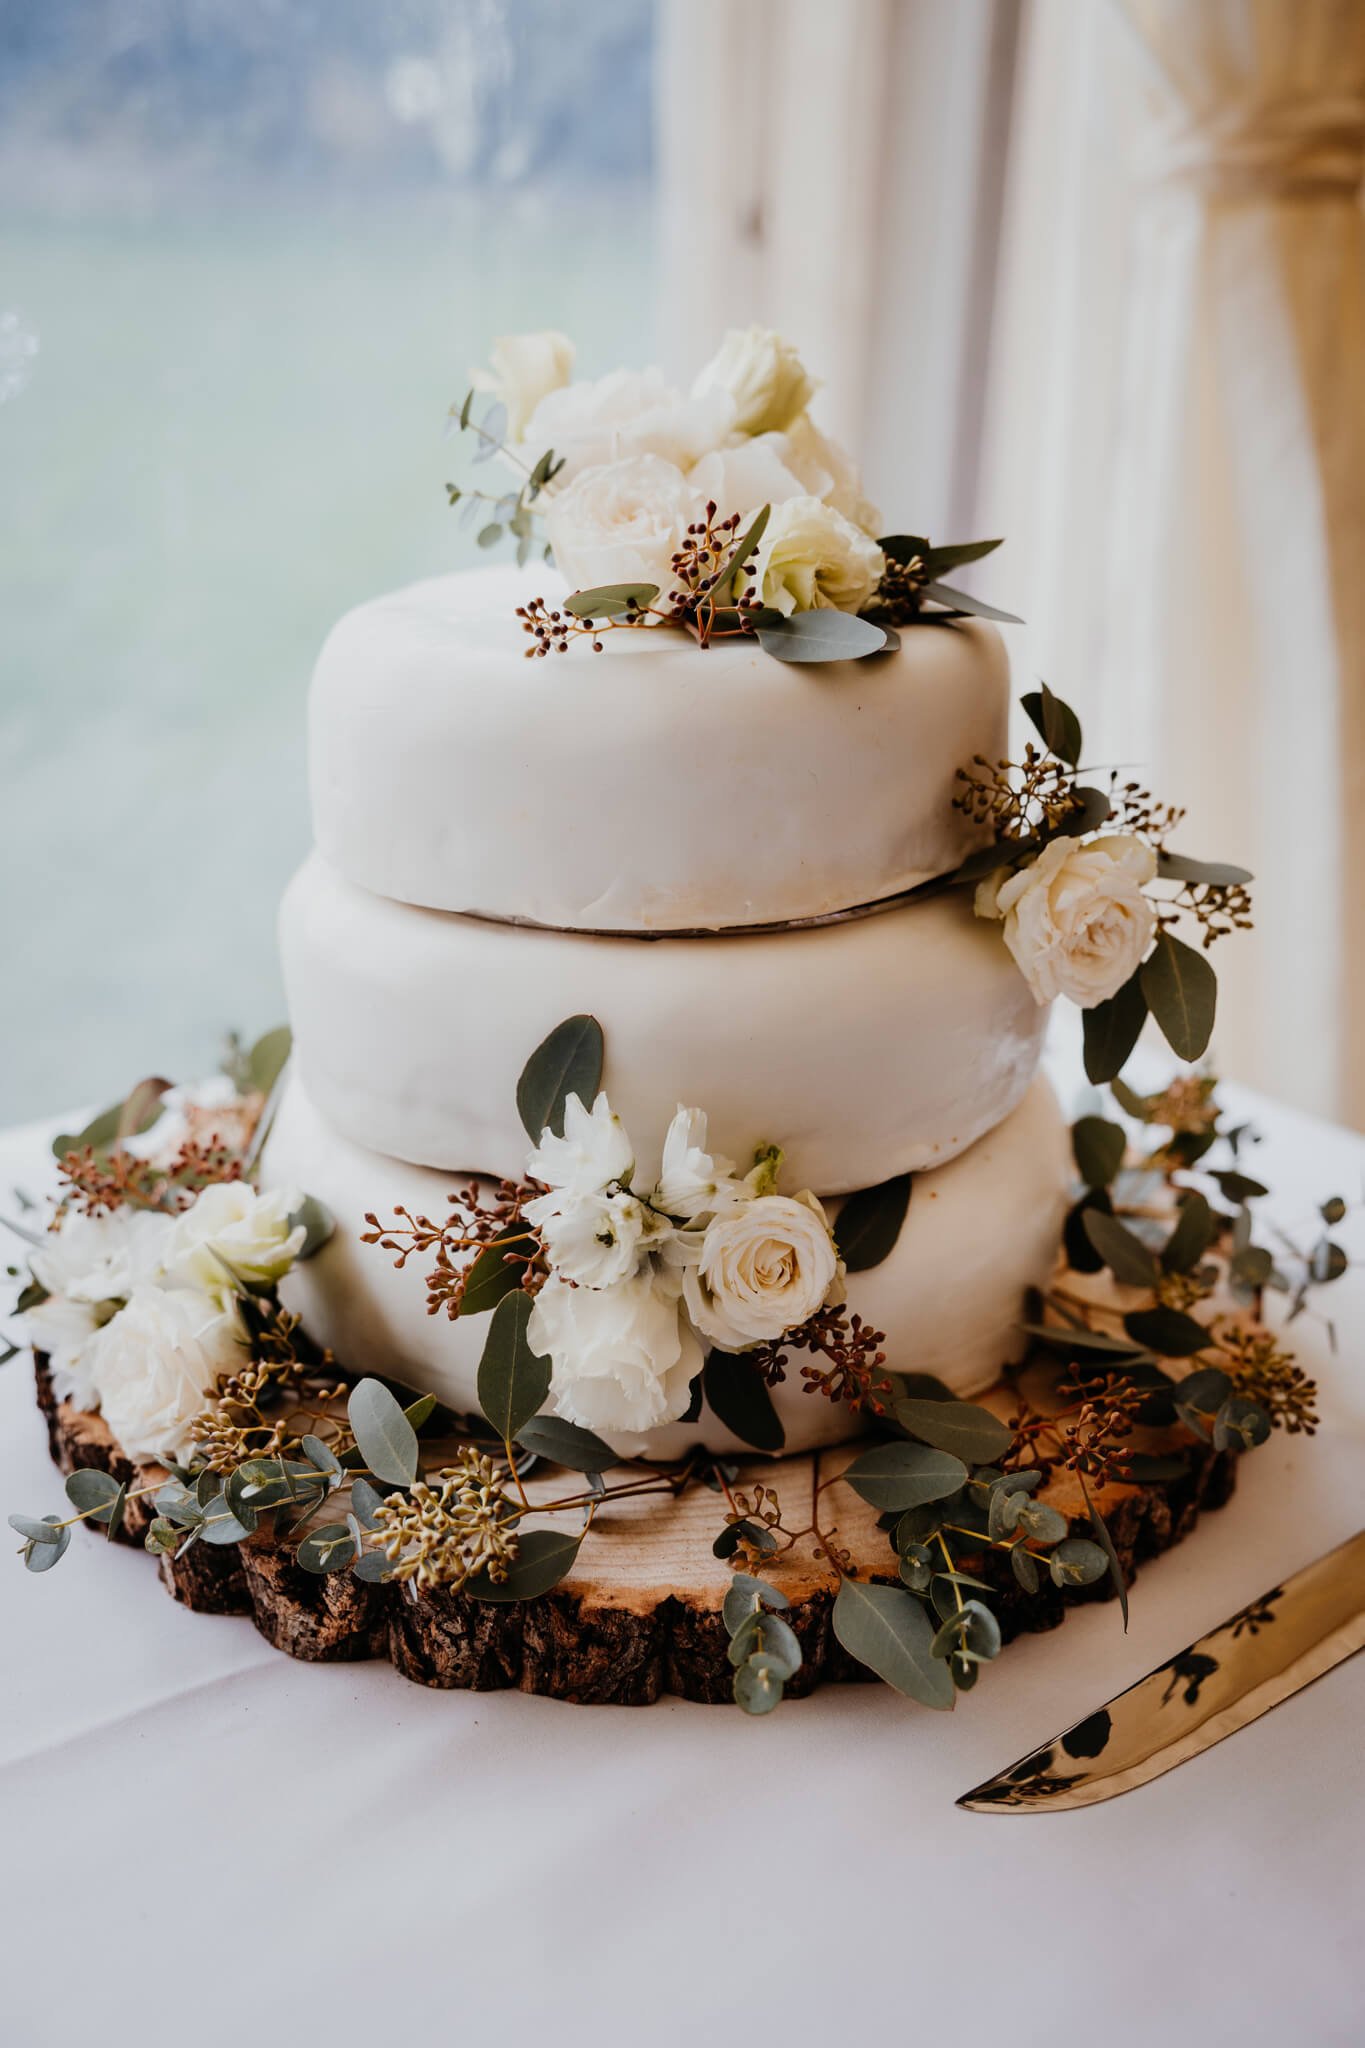 Beth-Shean-Wedding-cake.jpg